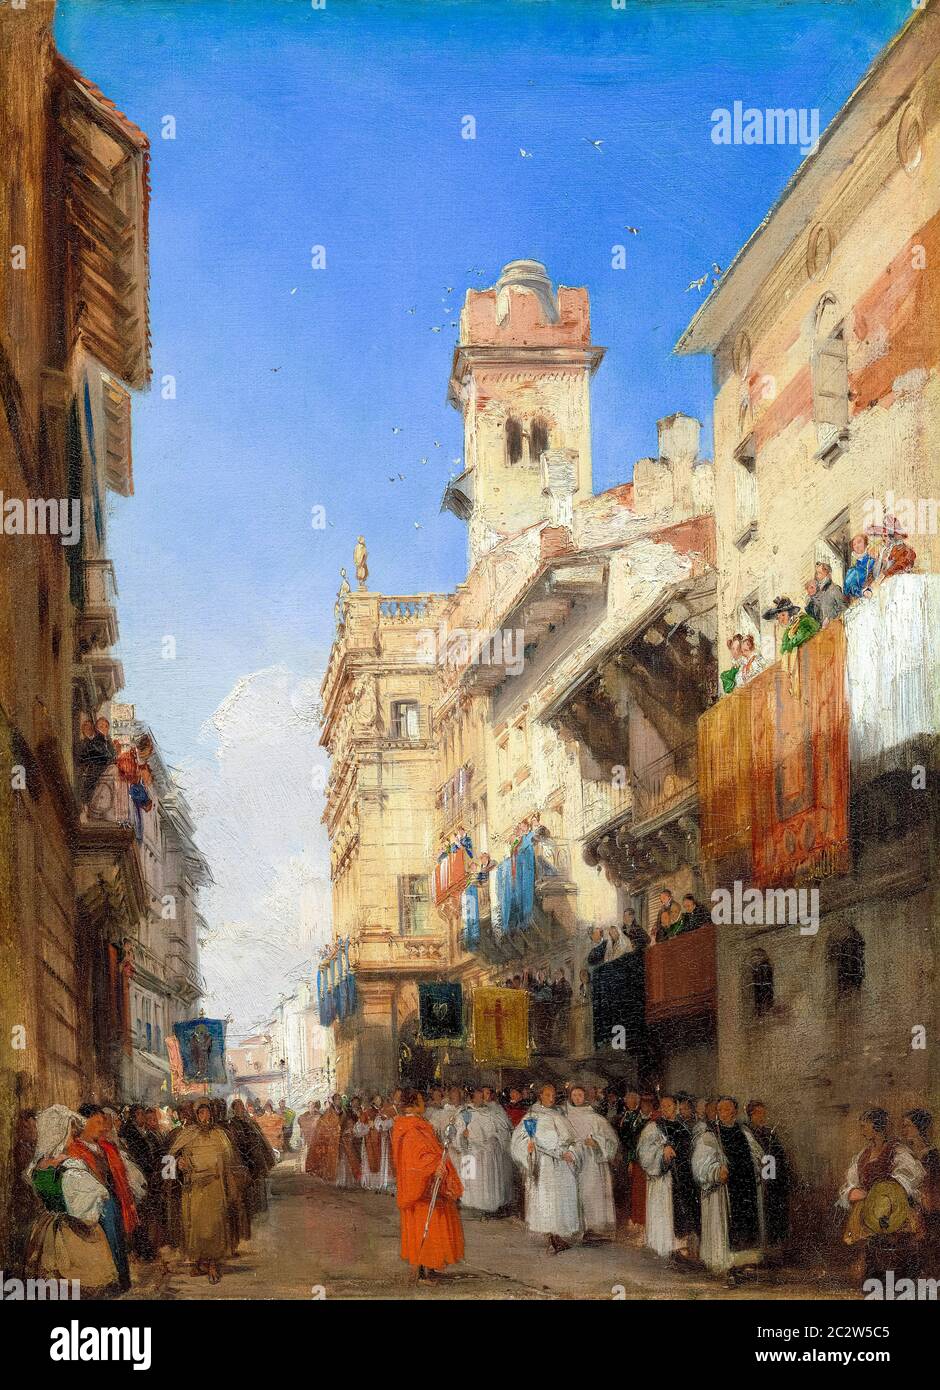 Corso Sant'Anastasia, Verona, Italy (Palace of Count Maffei), painting by Richard Parkes Bonington, 1828 Stock Photo